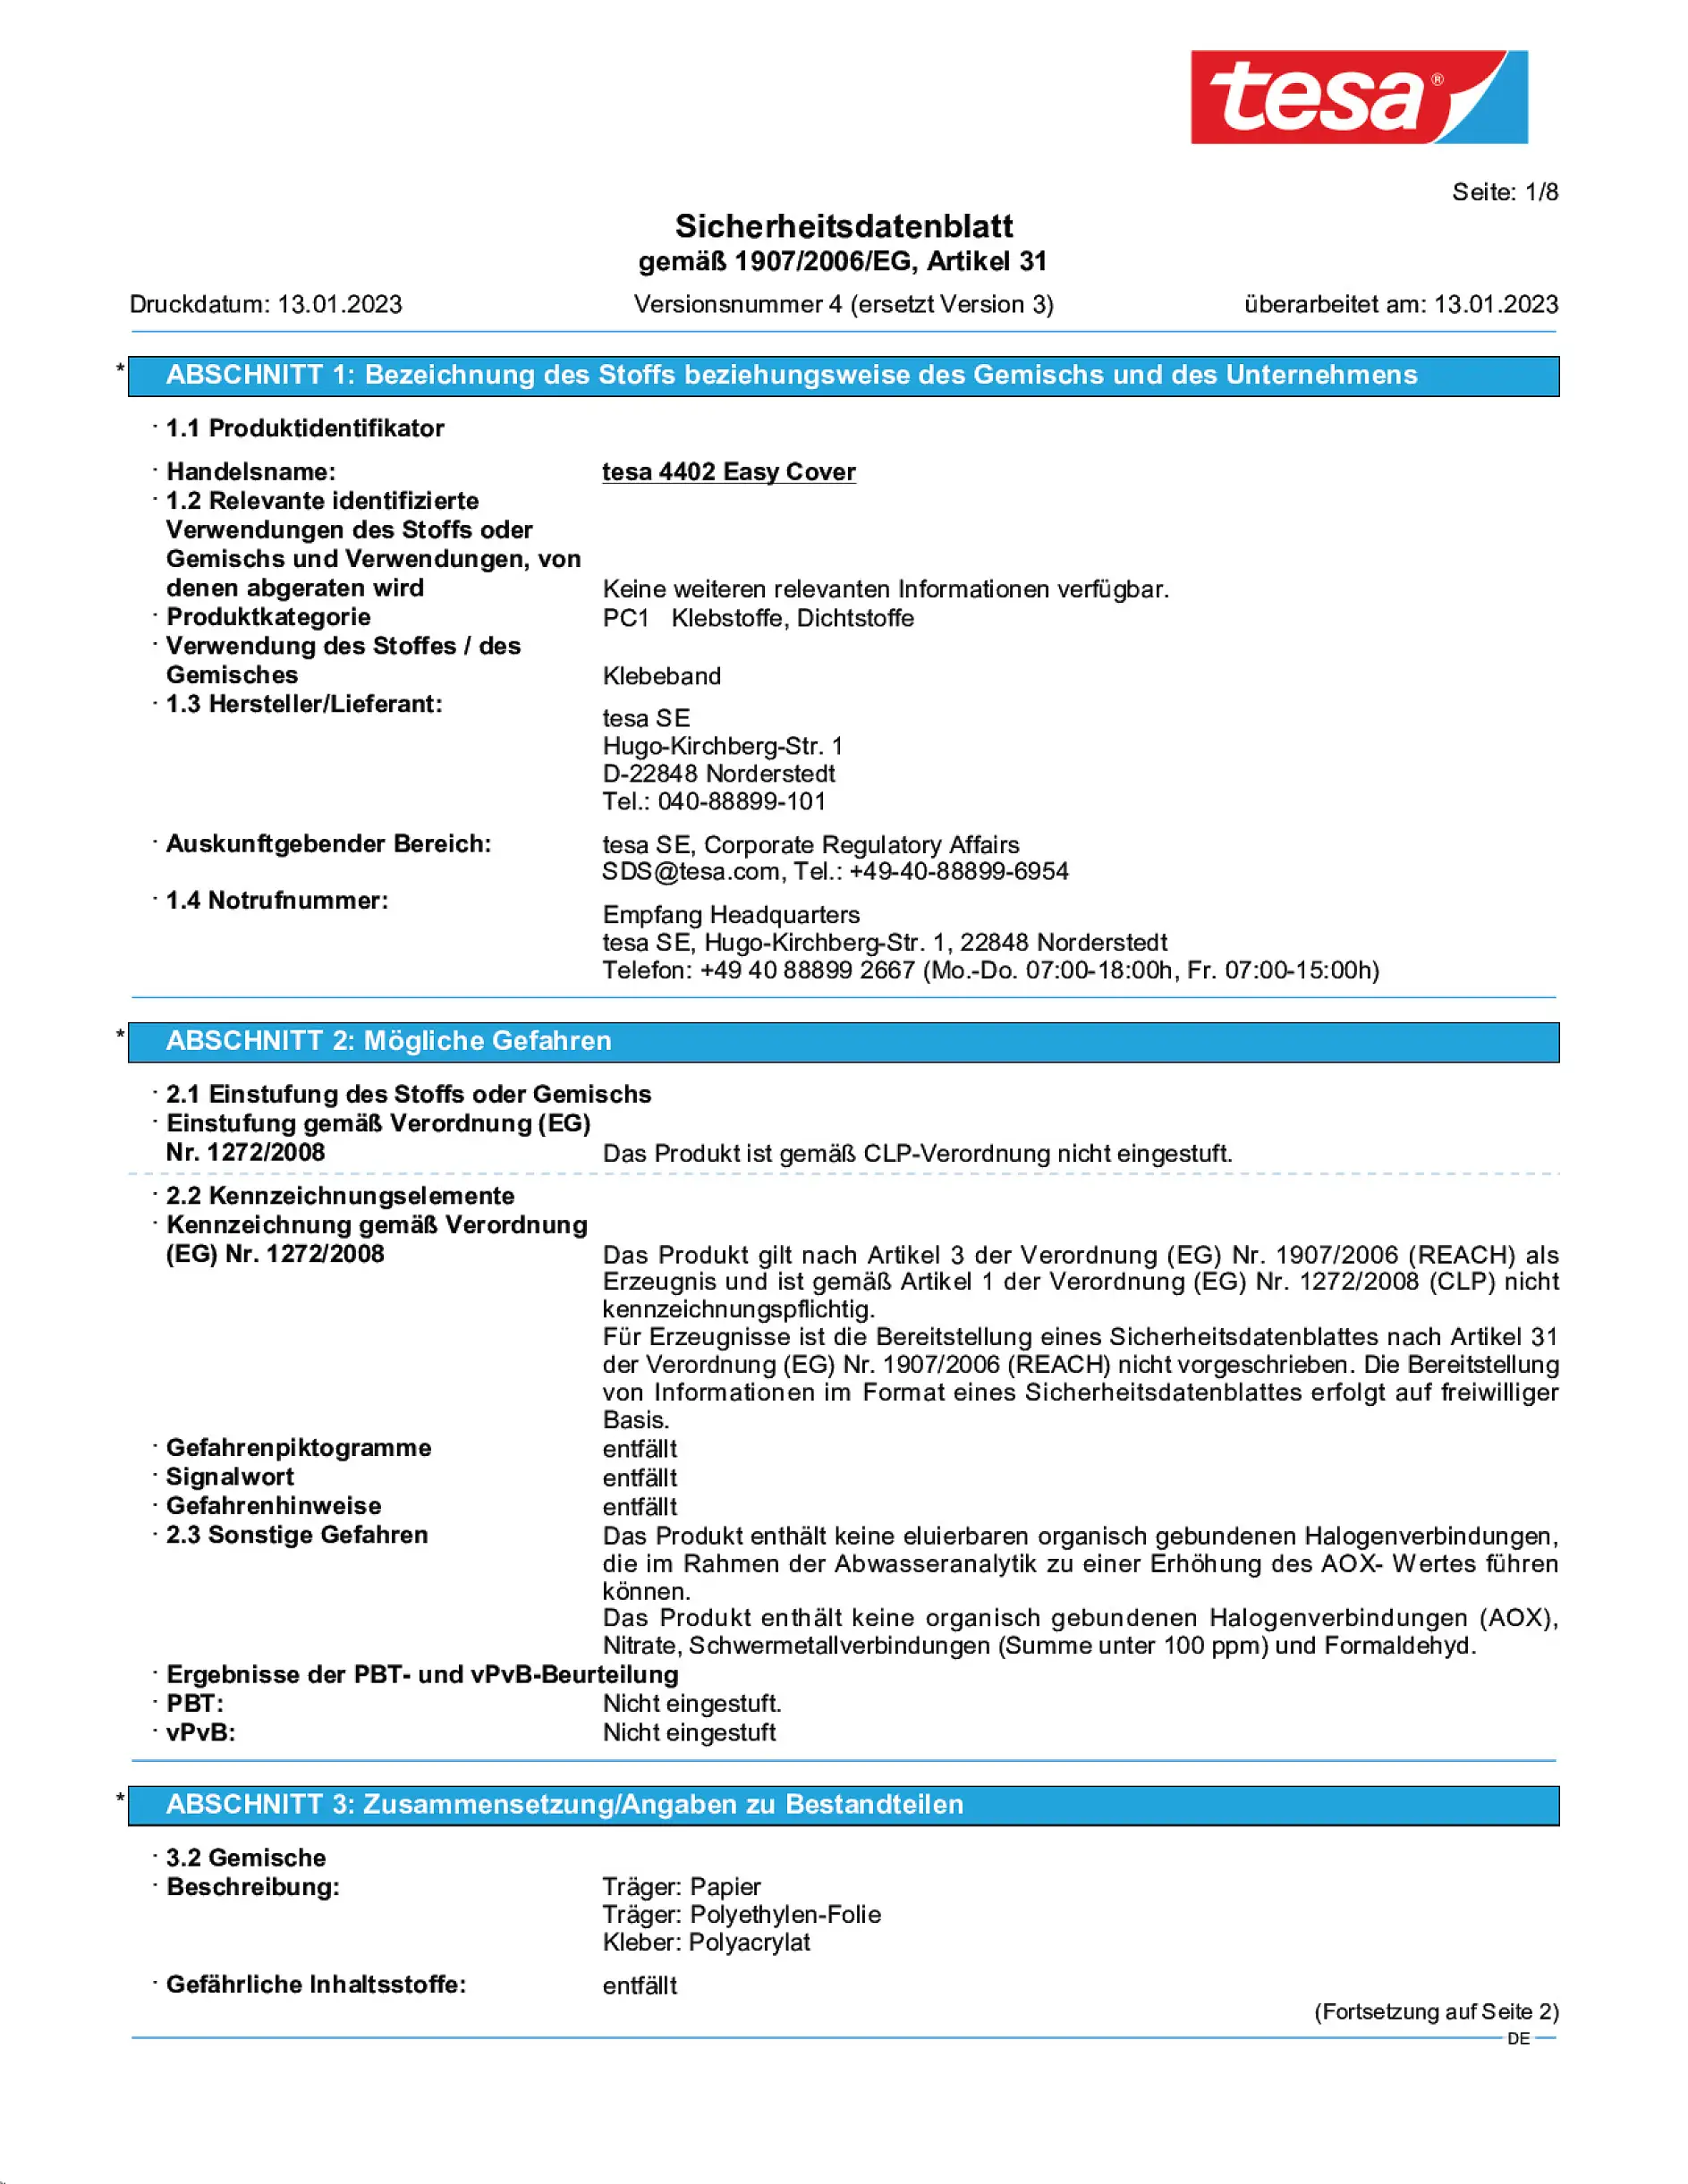 Safety data sheet_tesa® Professional 04402_de-DE_v4